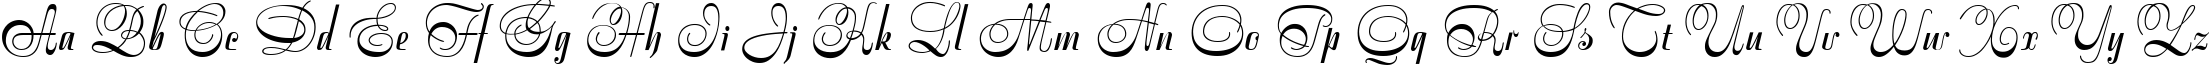 Пример написания английского алфавита шрифтом Stradivari script